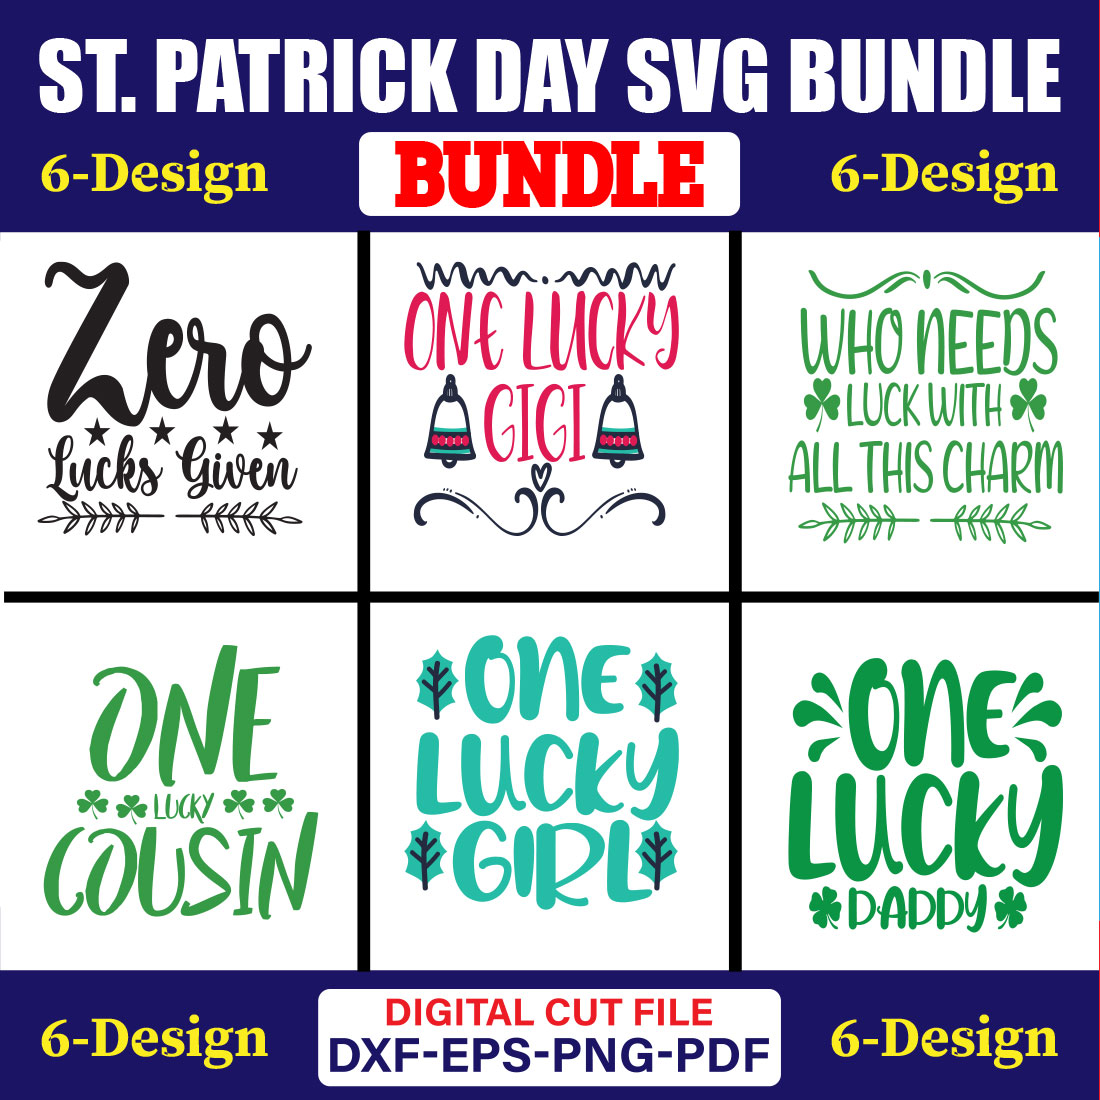 St Patrick Day SVG T-shirt Design Bundle Vol-26 cover image.